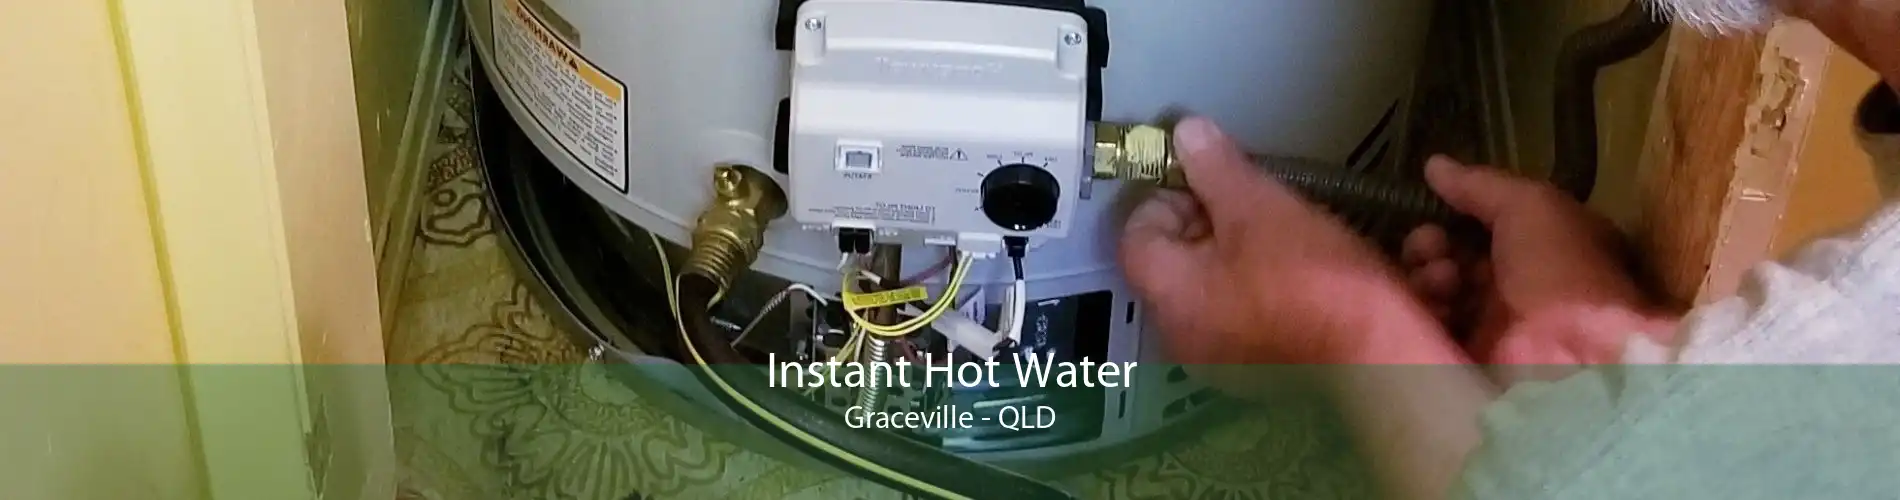 Instant Hot Water Graceville - QLD